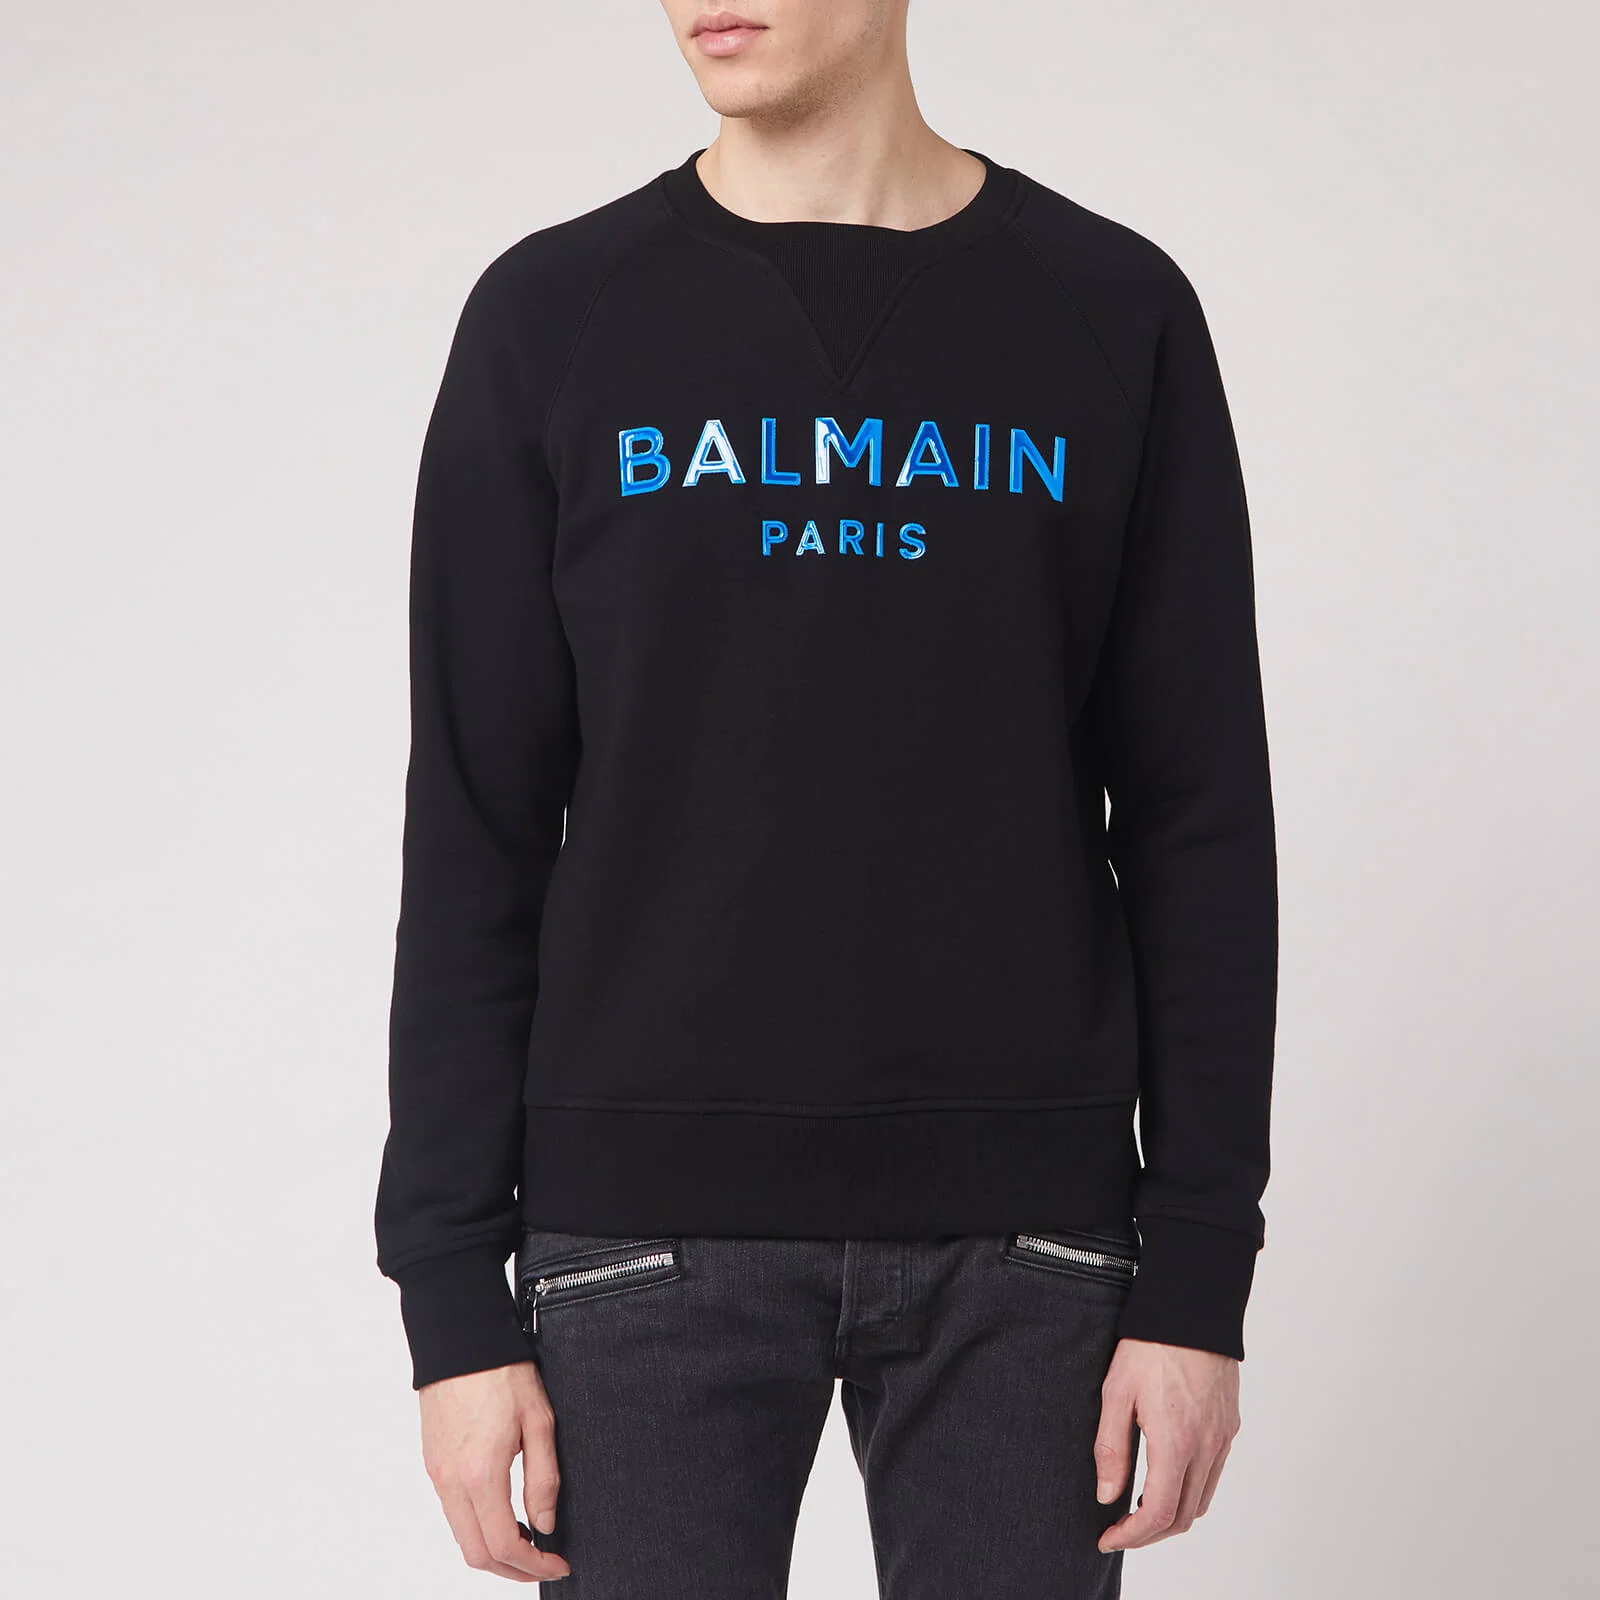 Balmain Men's Silicone Balmain Sweatshirt - Black/Blue Image 1